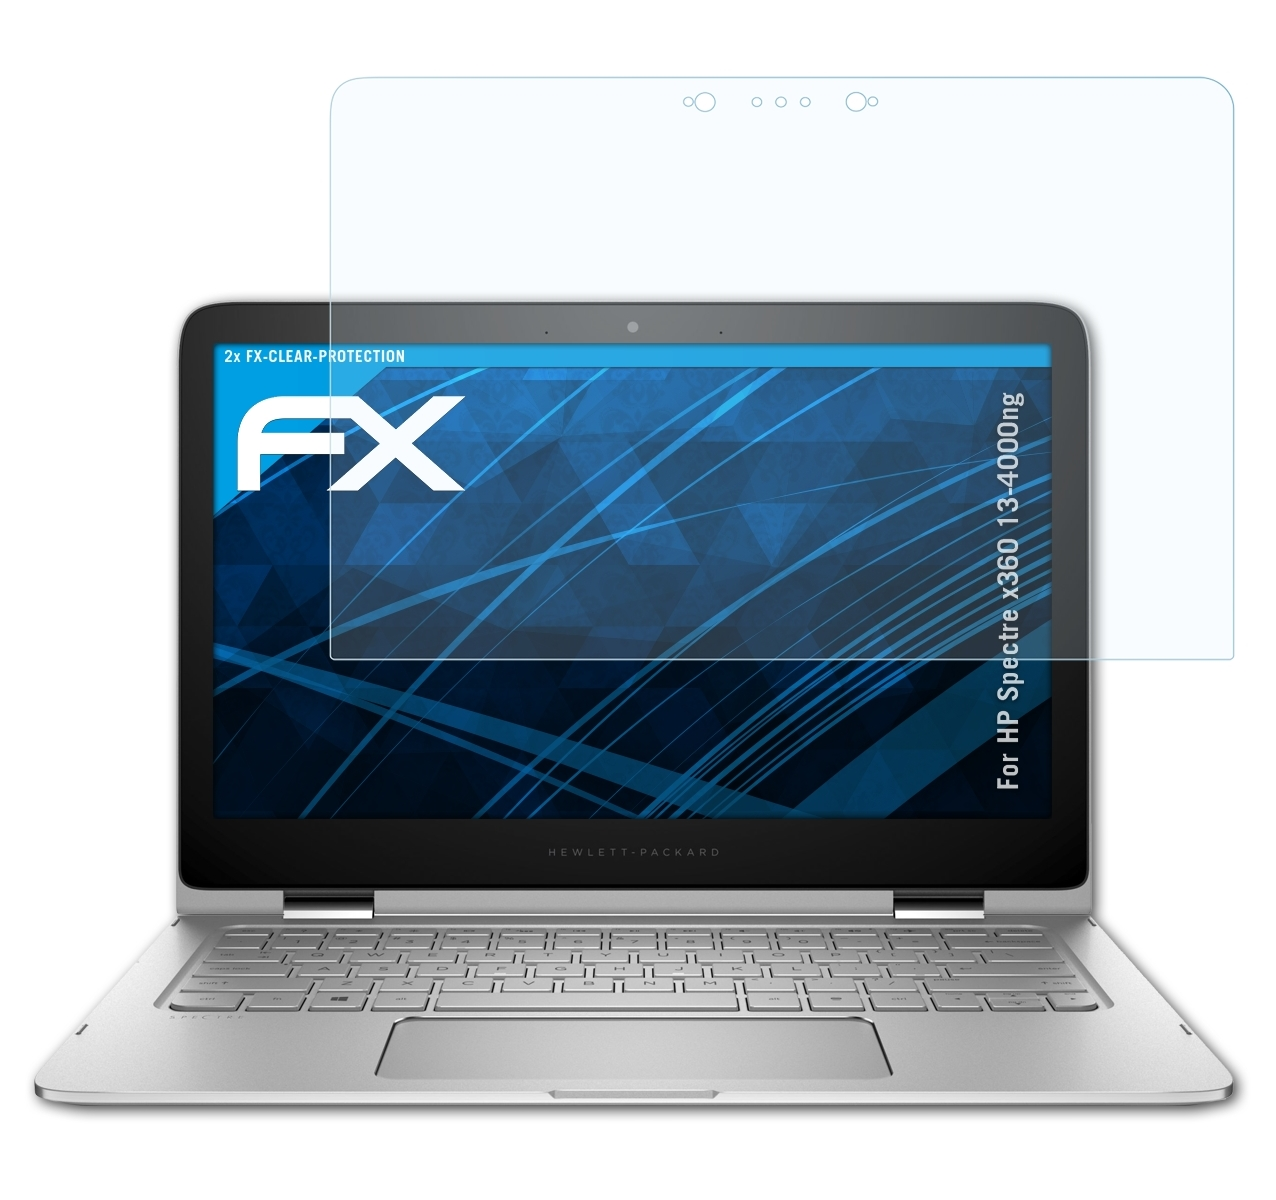 Spectre 2x HP FX-Clear 13-4000ng) ATFOLIX x360 Displayschutz(für